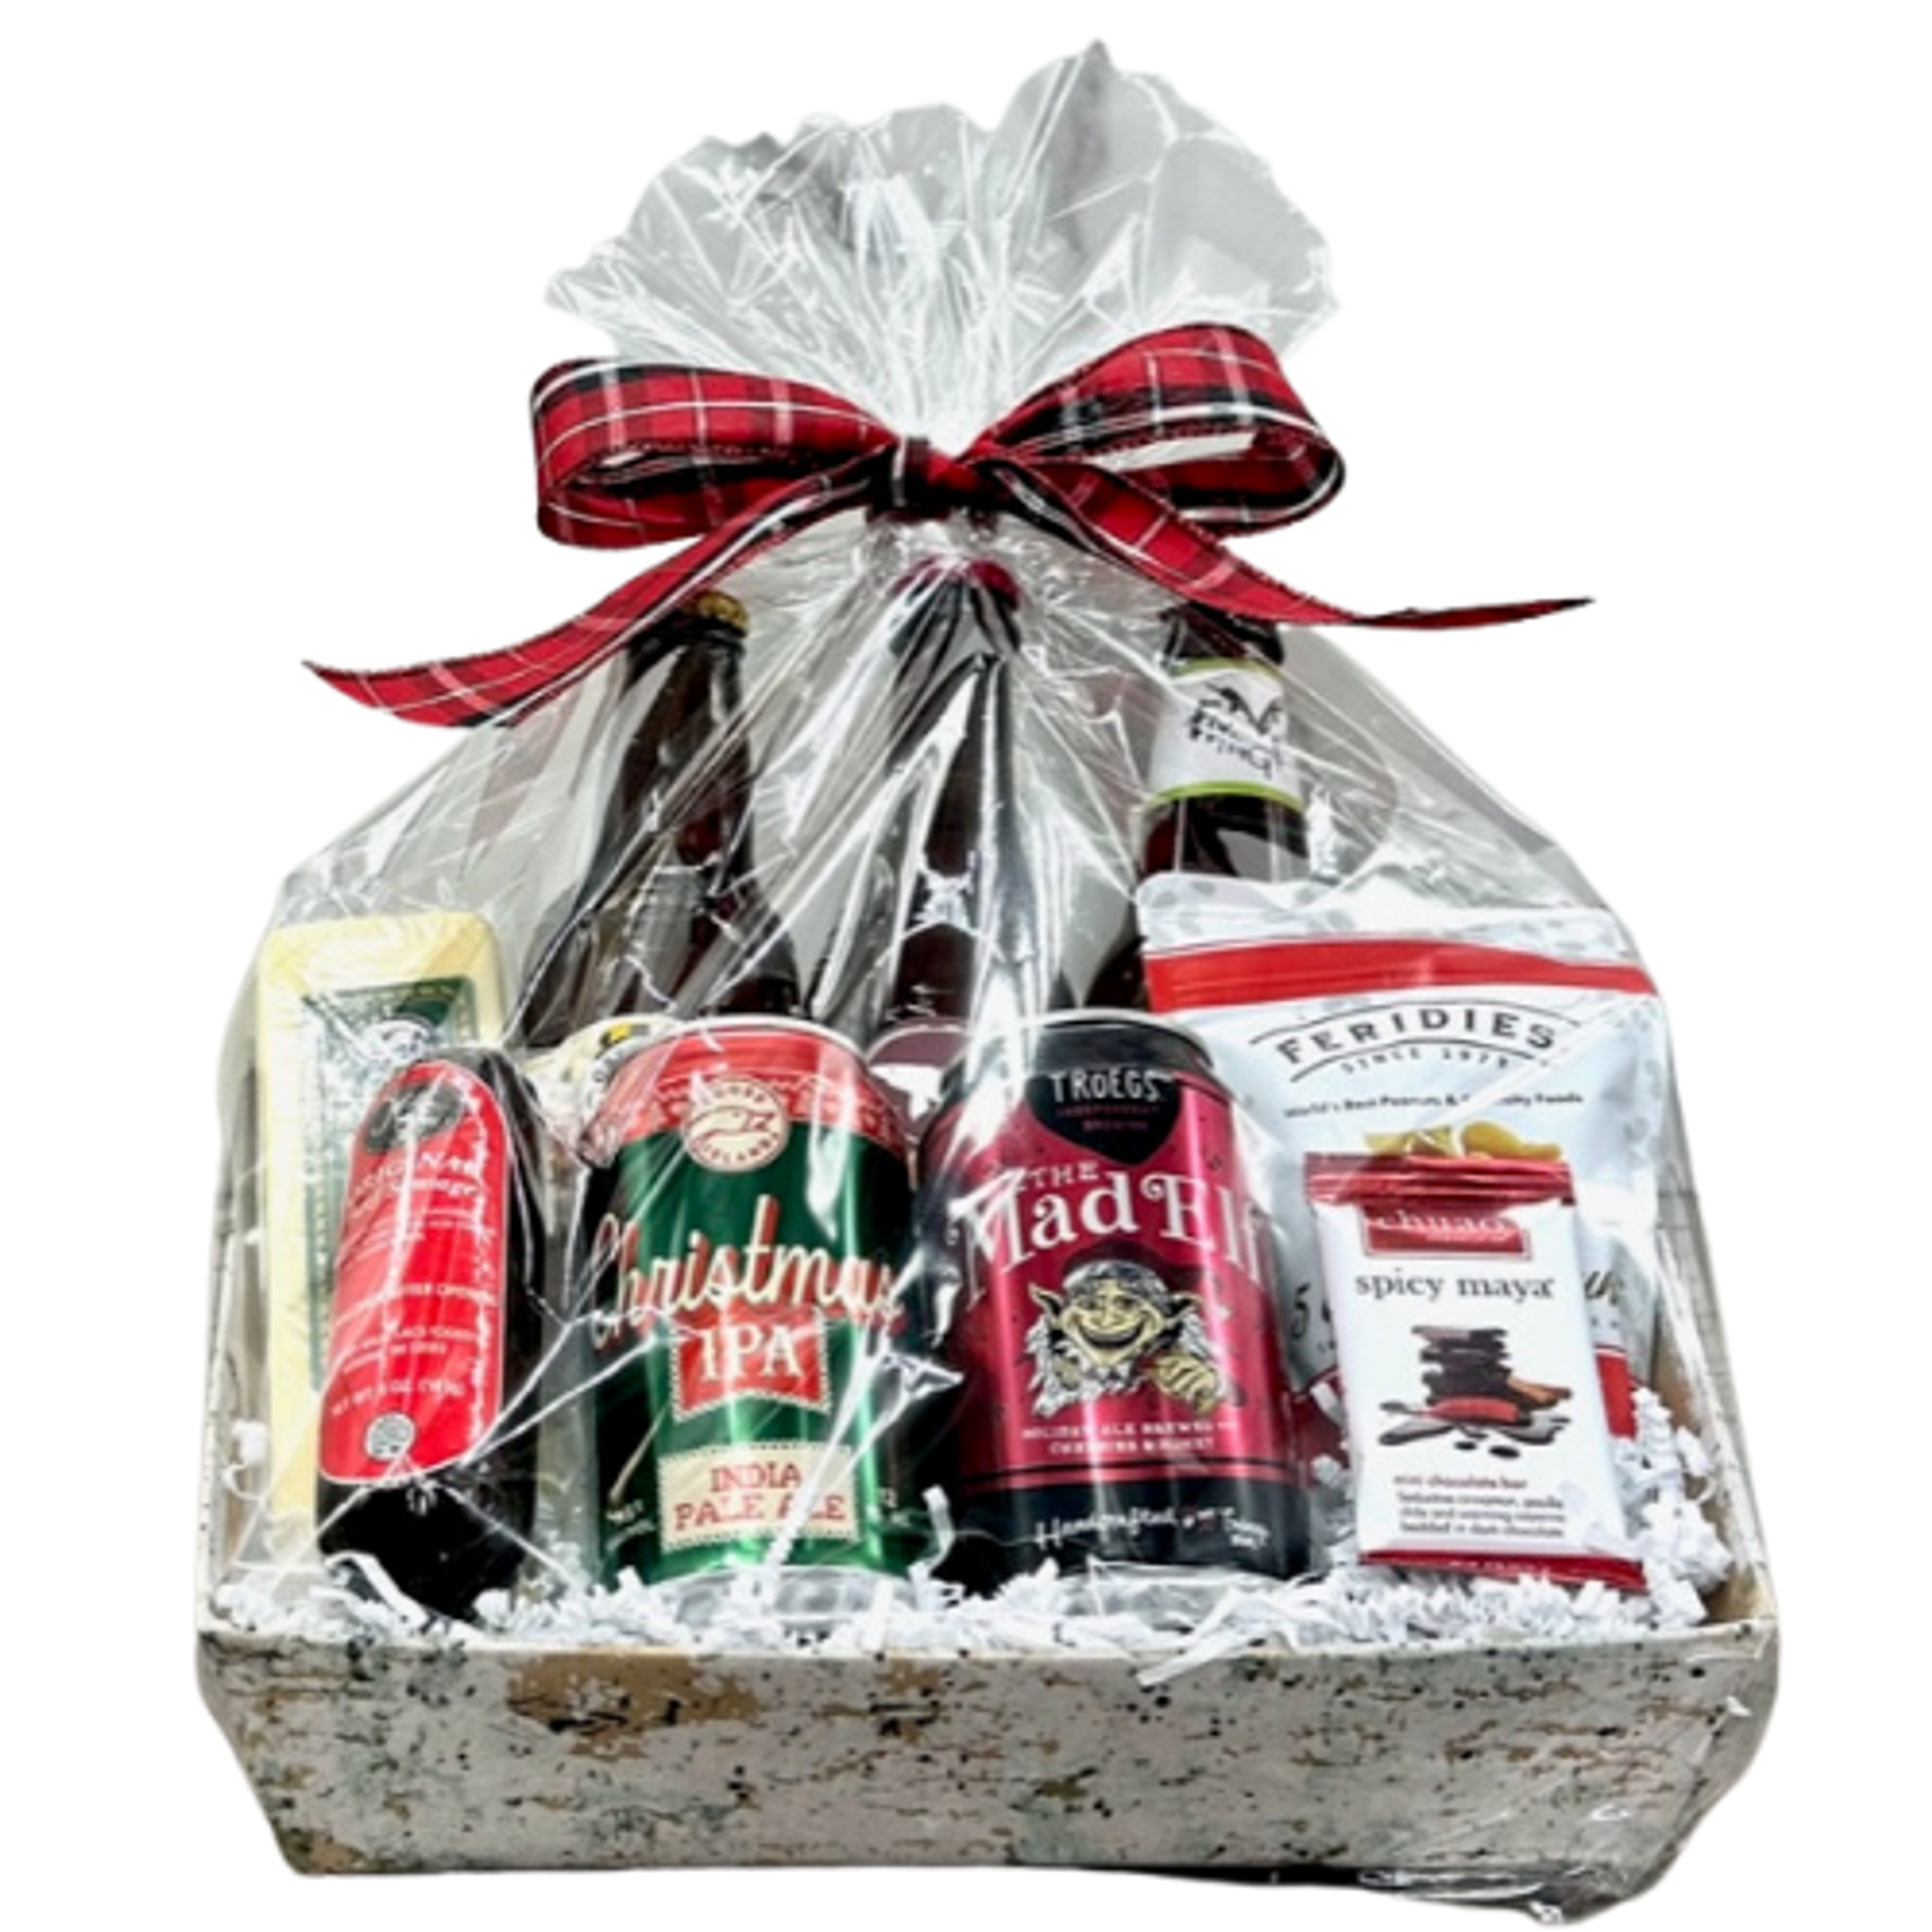 Beer Crate Gift Basket Store Maryland Gift Basket